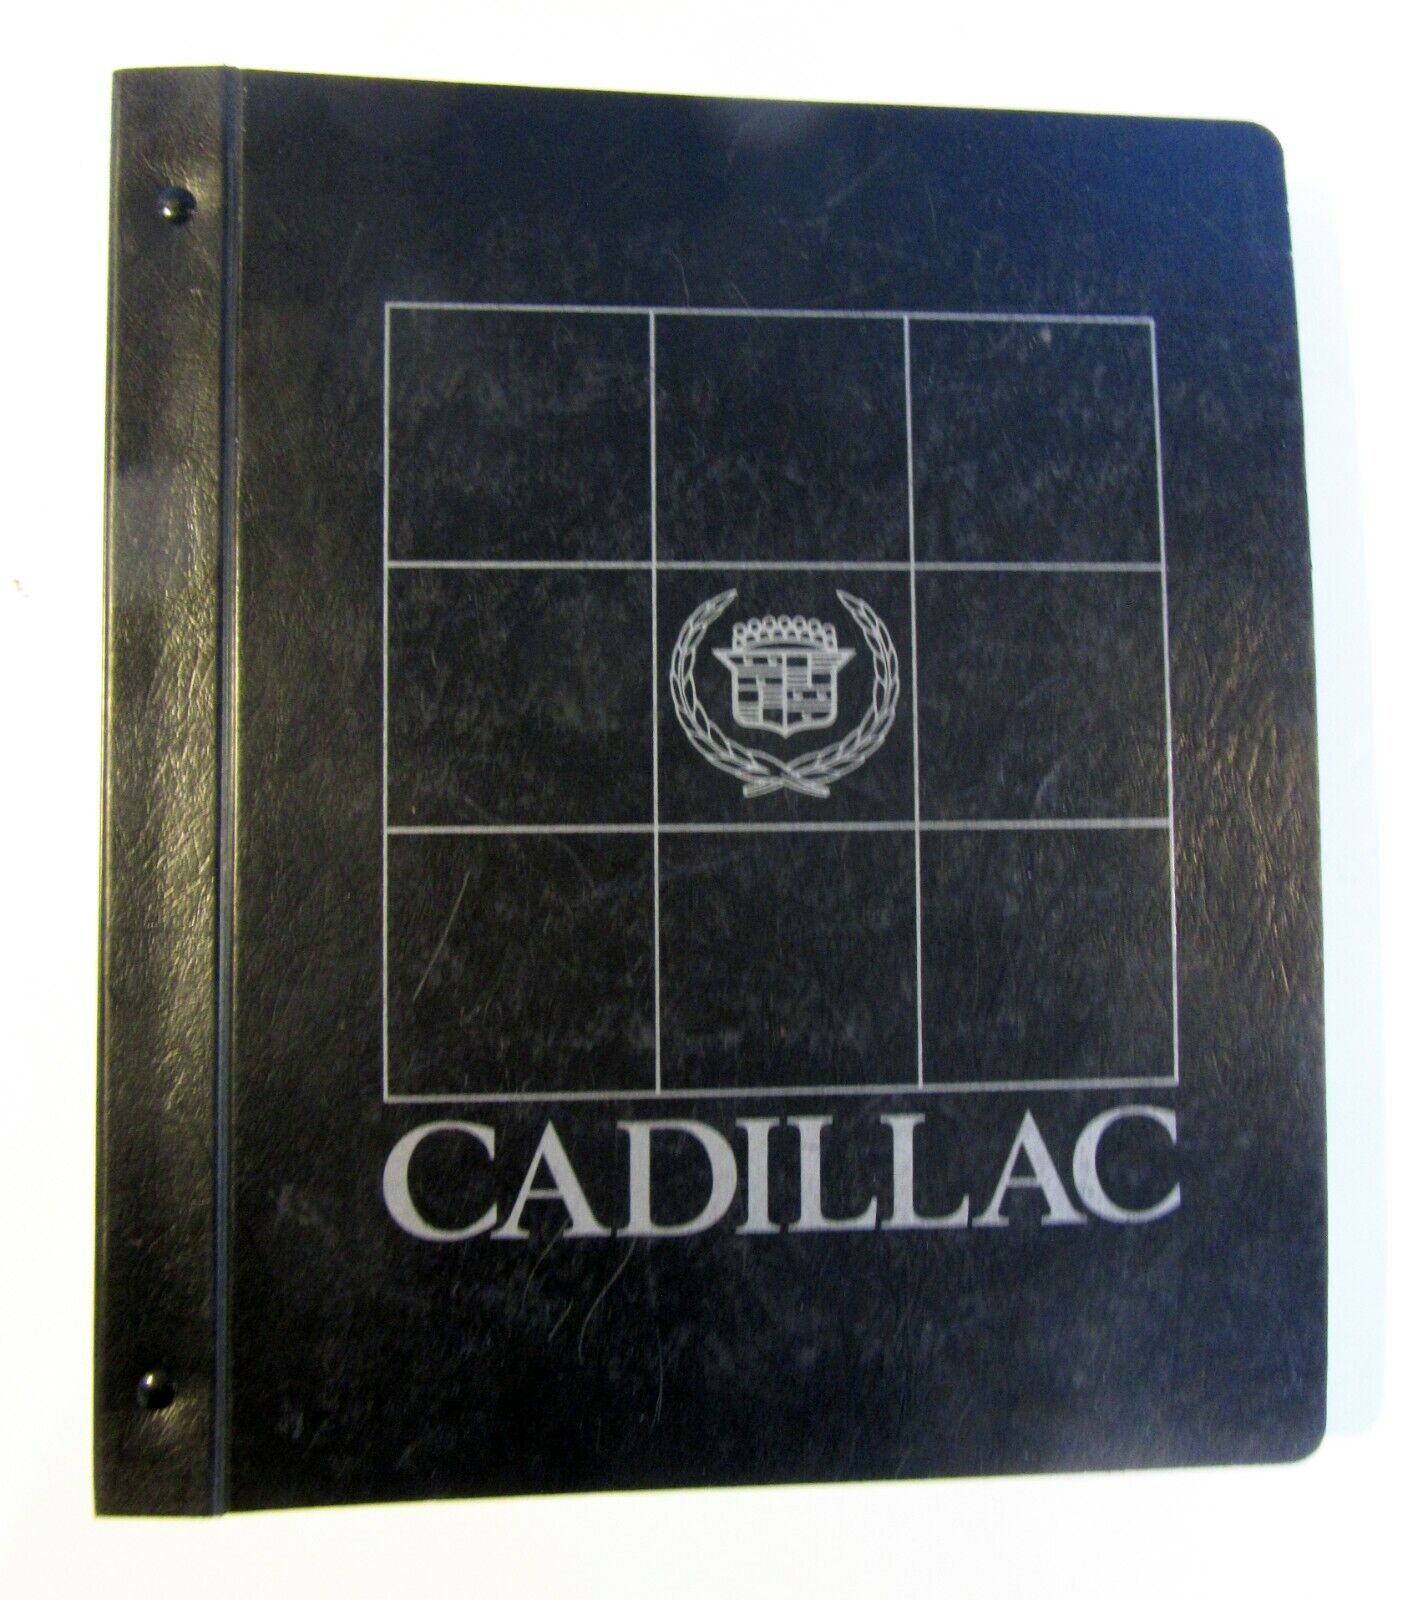 Original Factroy Service Manual for the 1990 Cadilliac ALLANTE, Plastic Binder